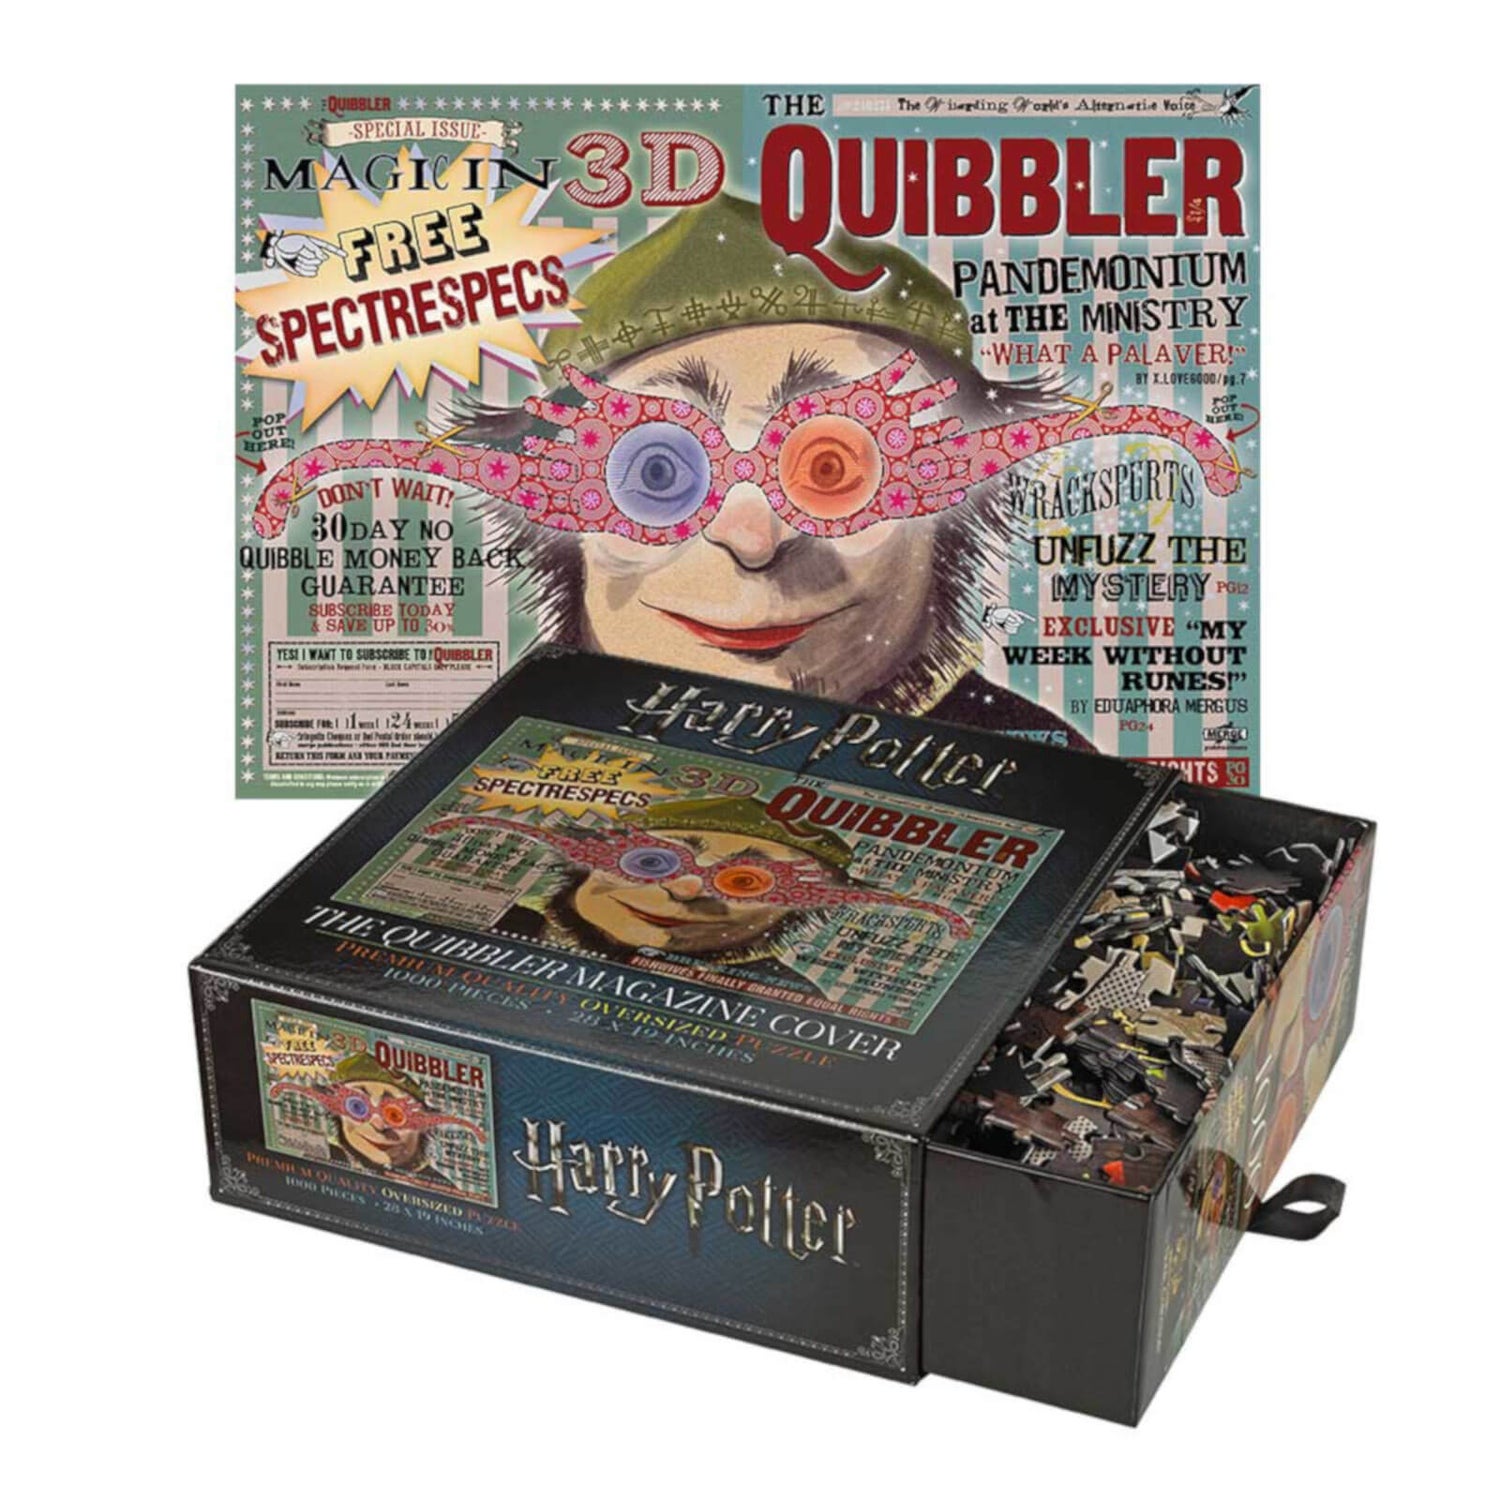 Harry Potter Quibbler Magazine Jigsaw Puzzle